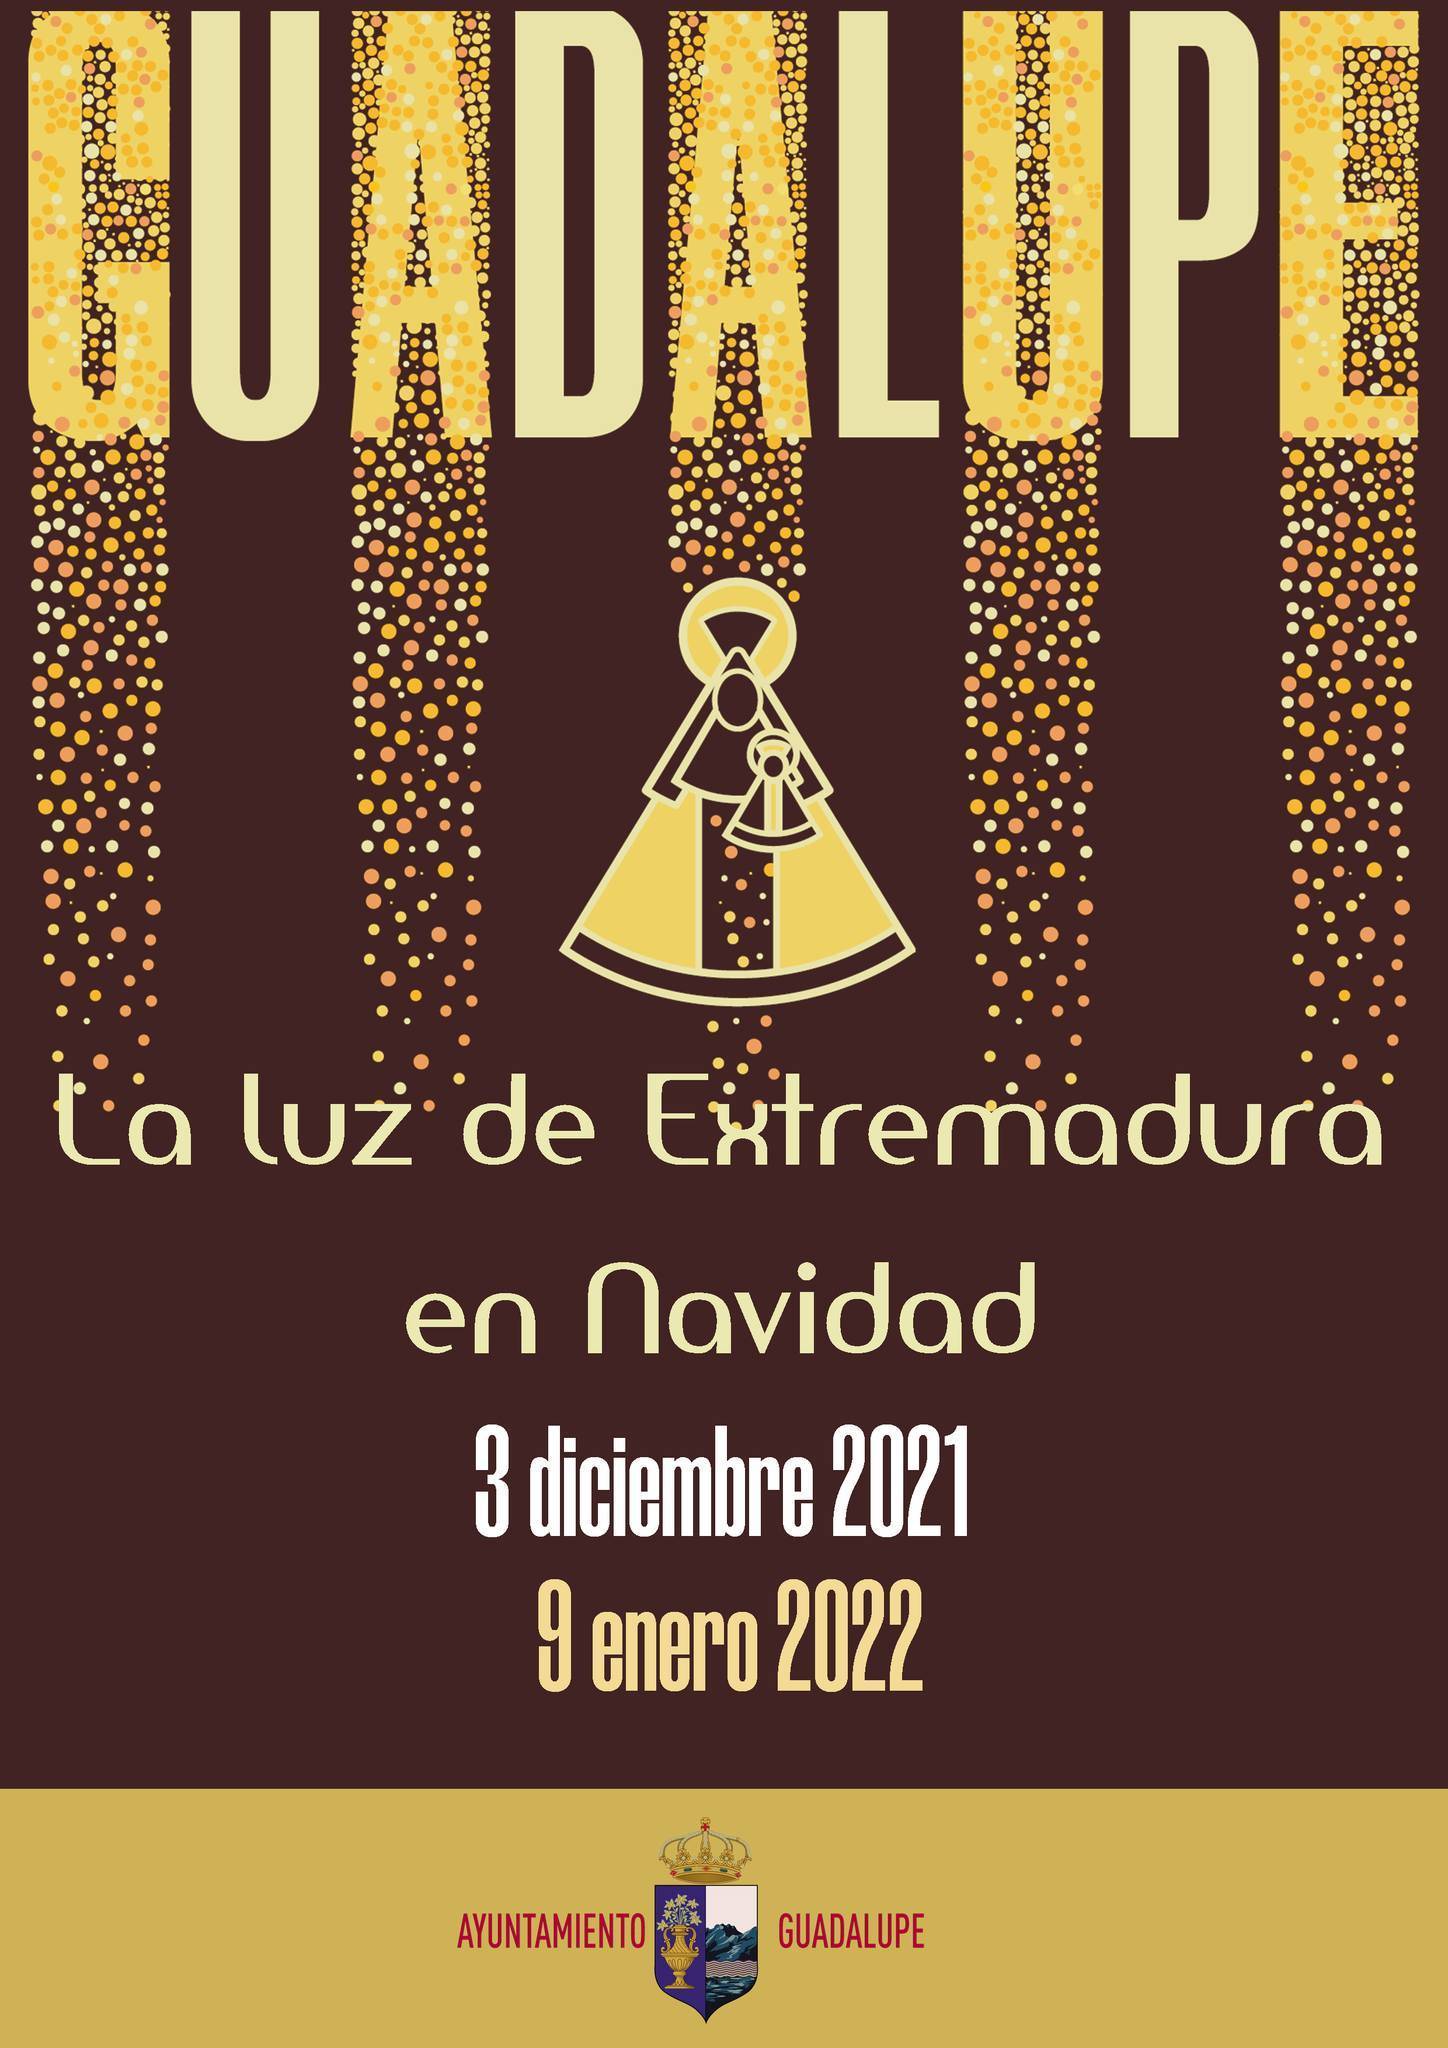 Encendido navideño (2021) - Guadalupe (Cáceres) 3